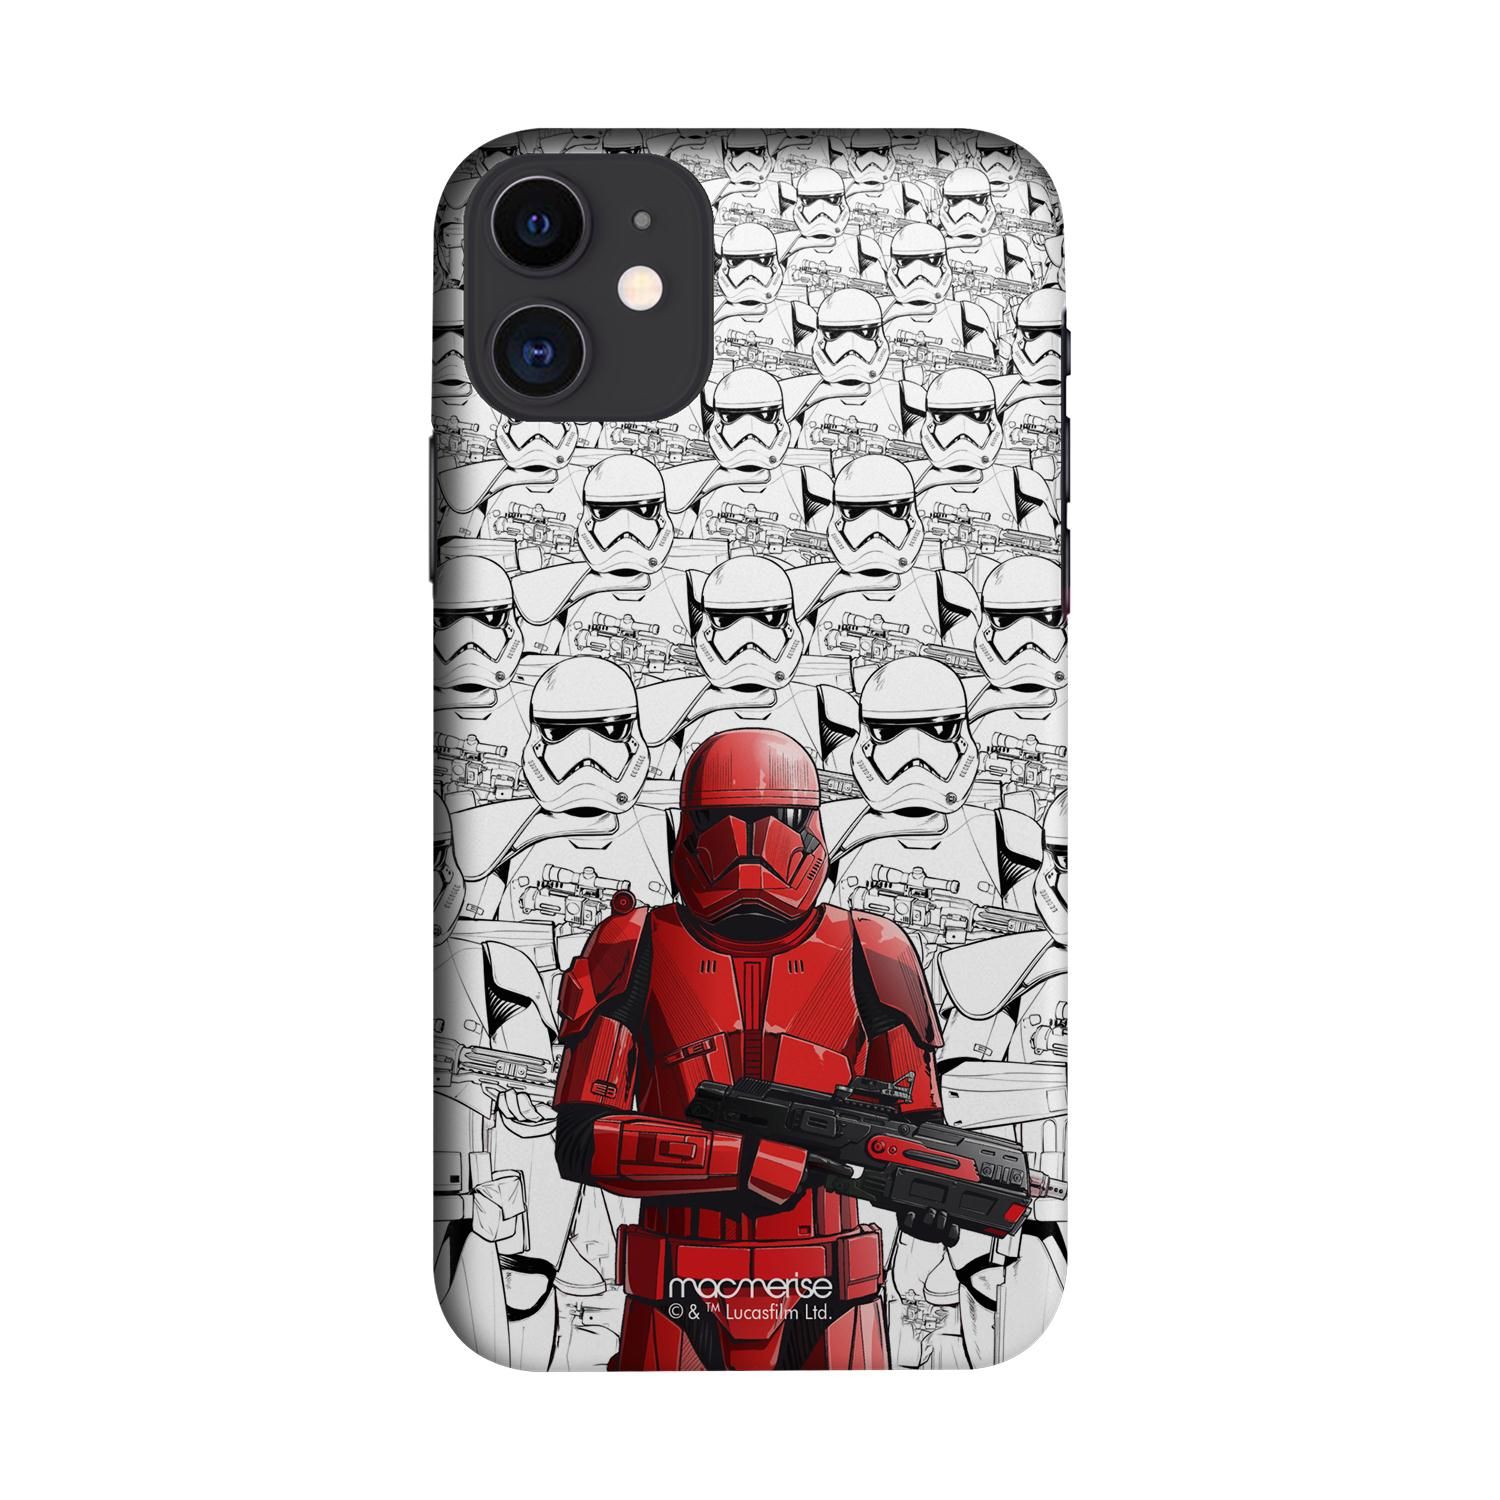 Buy Sith Troopers - Sleek Phone Case for iPhone 11 Online